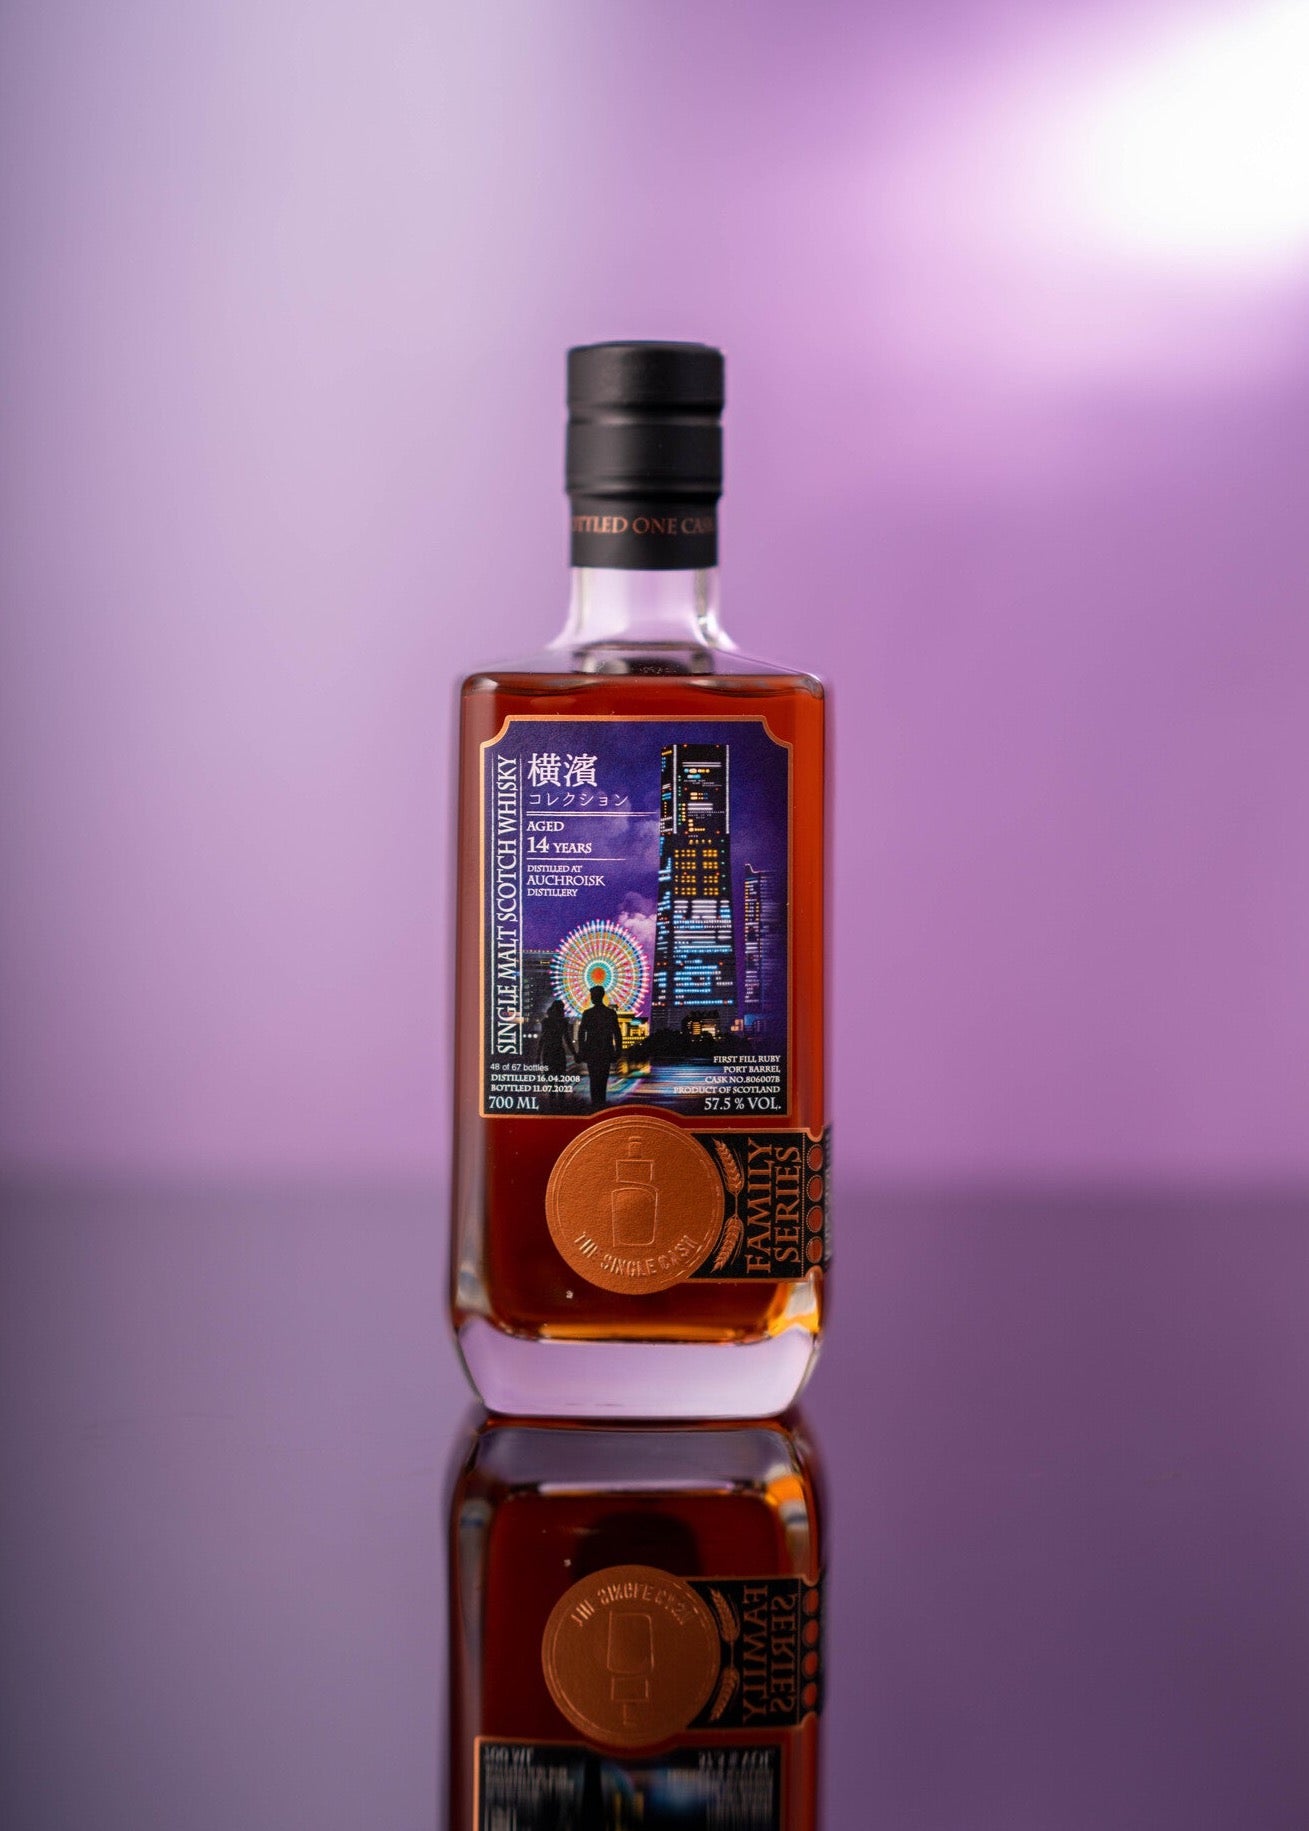 Auchroisk single cask scotch whisky Japan  Edit alt text